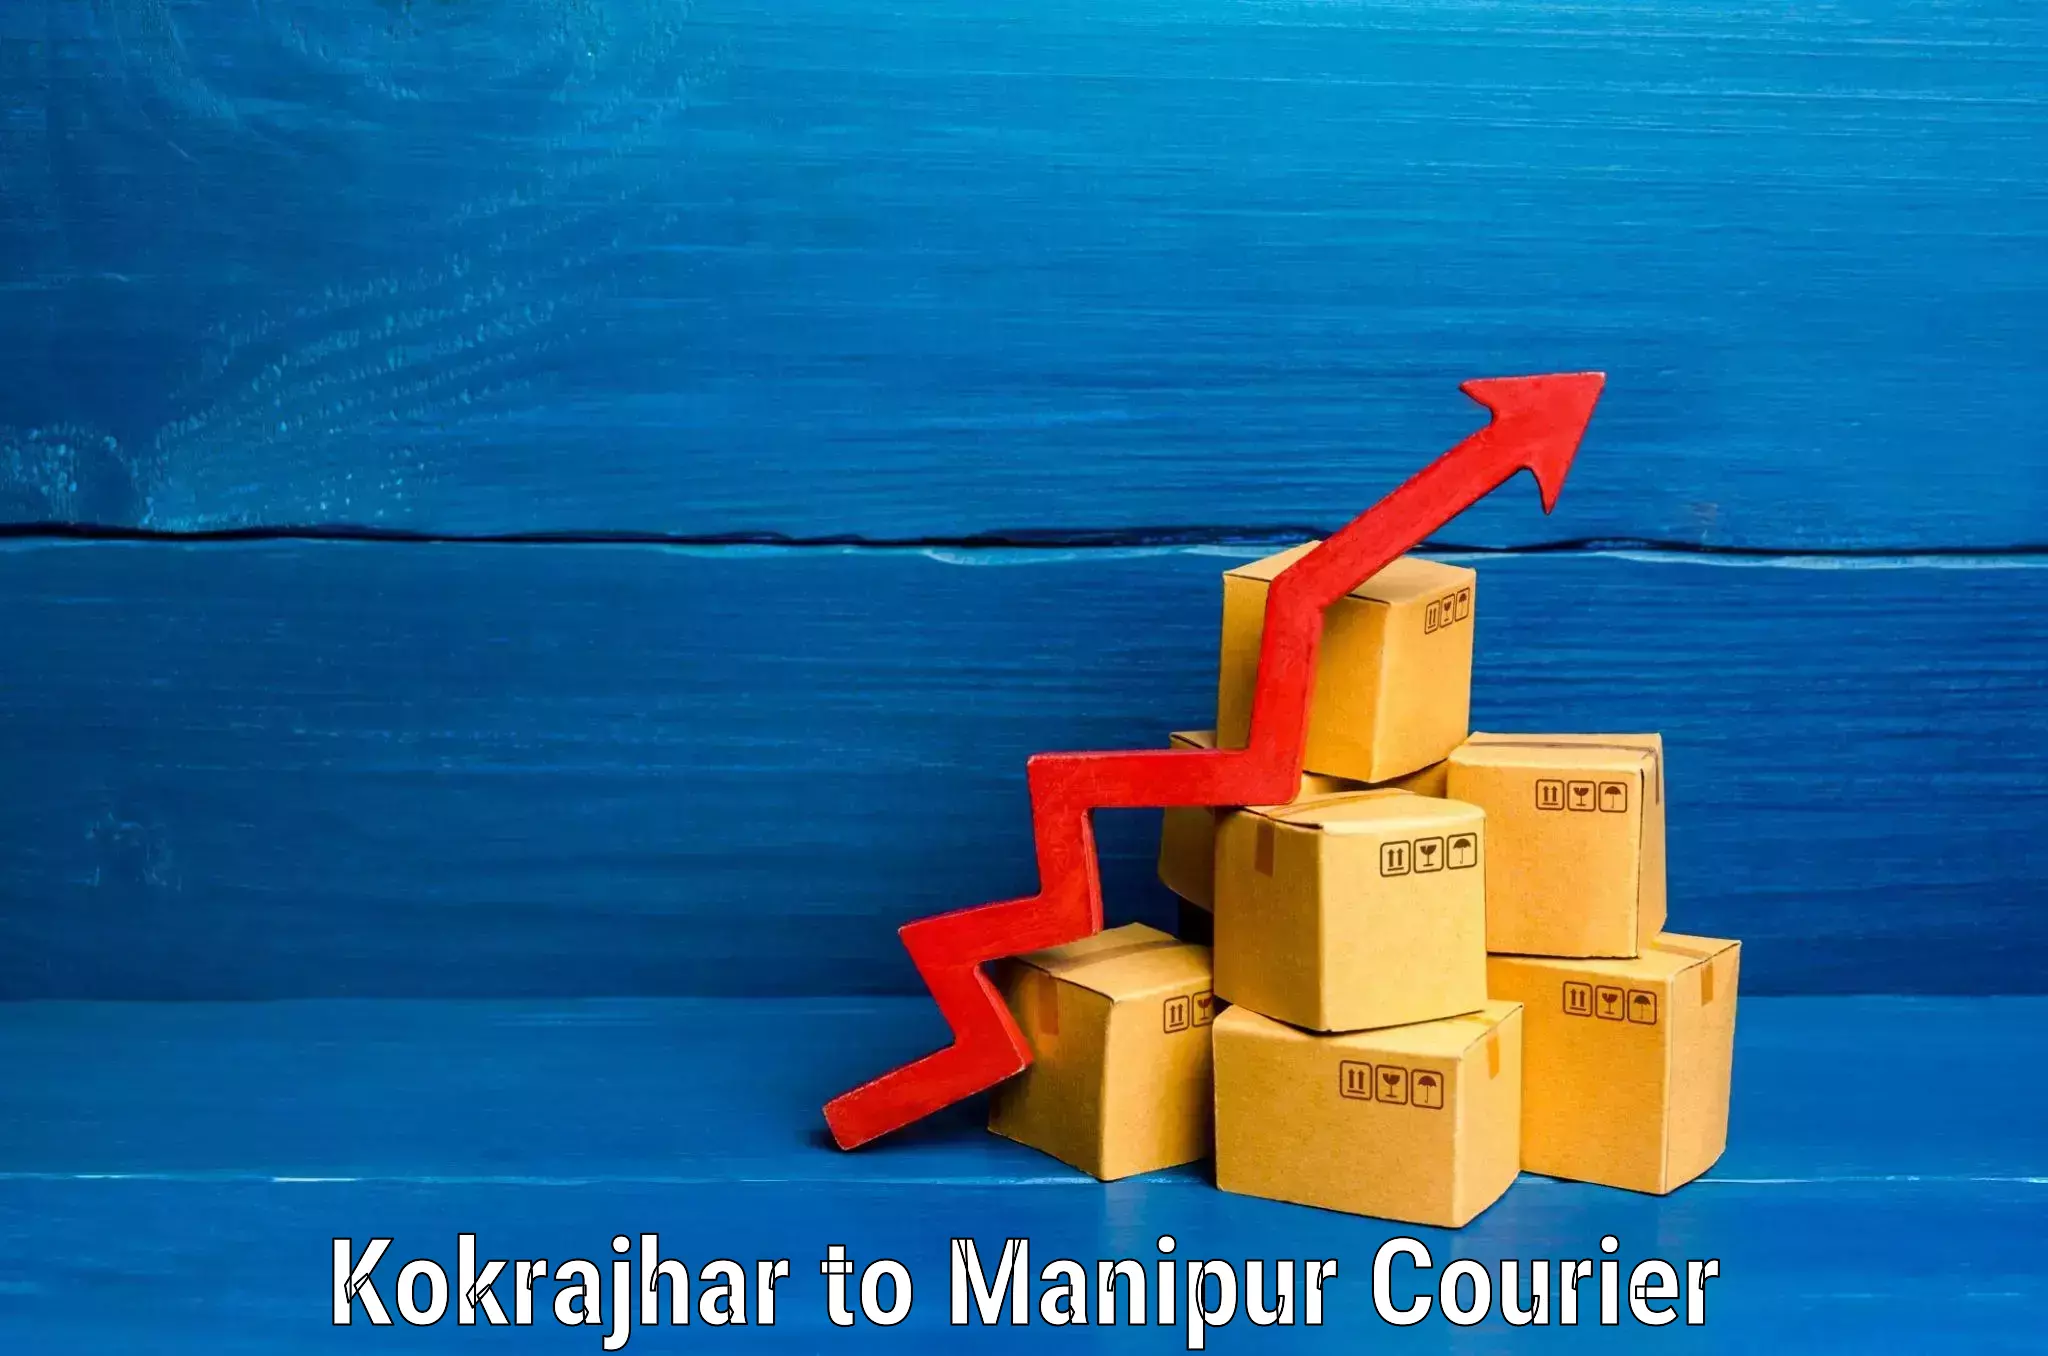 Luggage shipment specialists Kokrajhar to Churachandpur